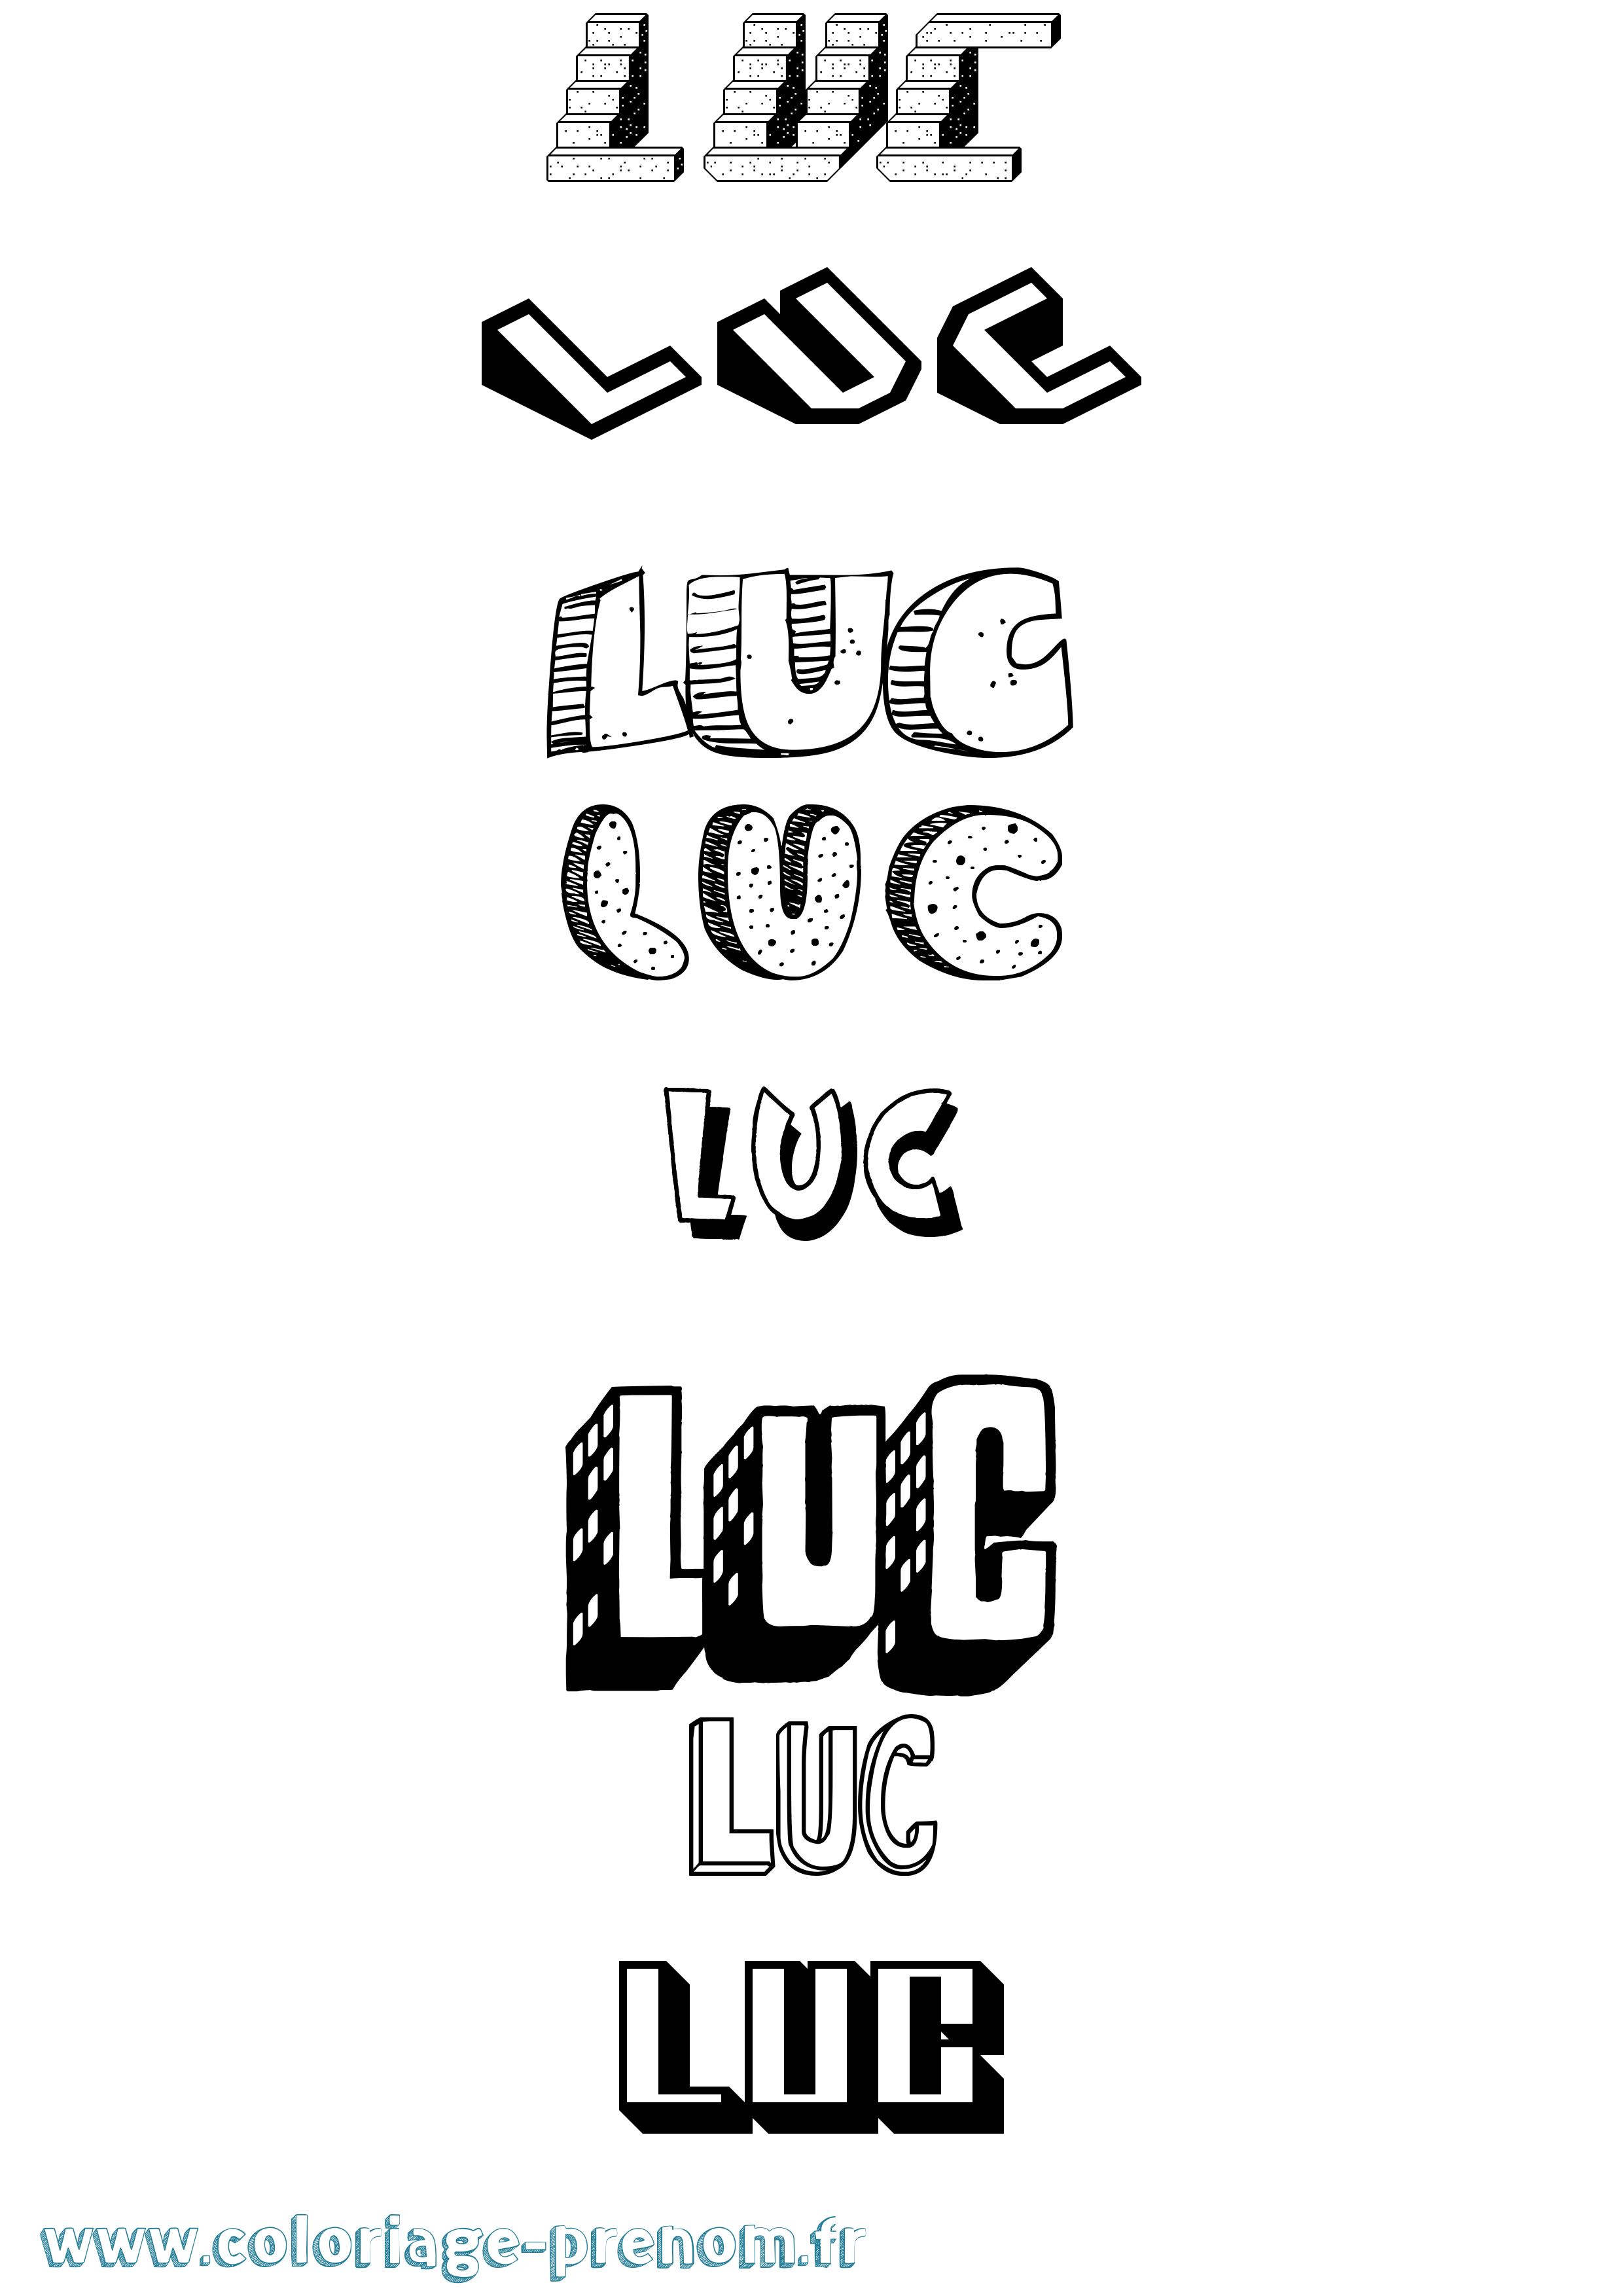 Coloriage prénom Luc